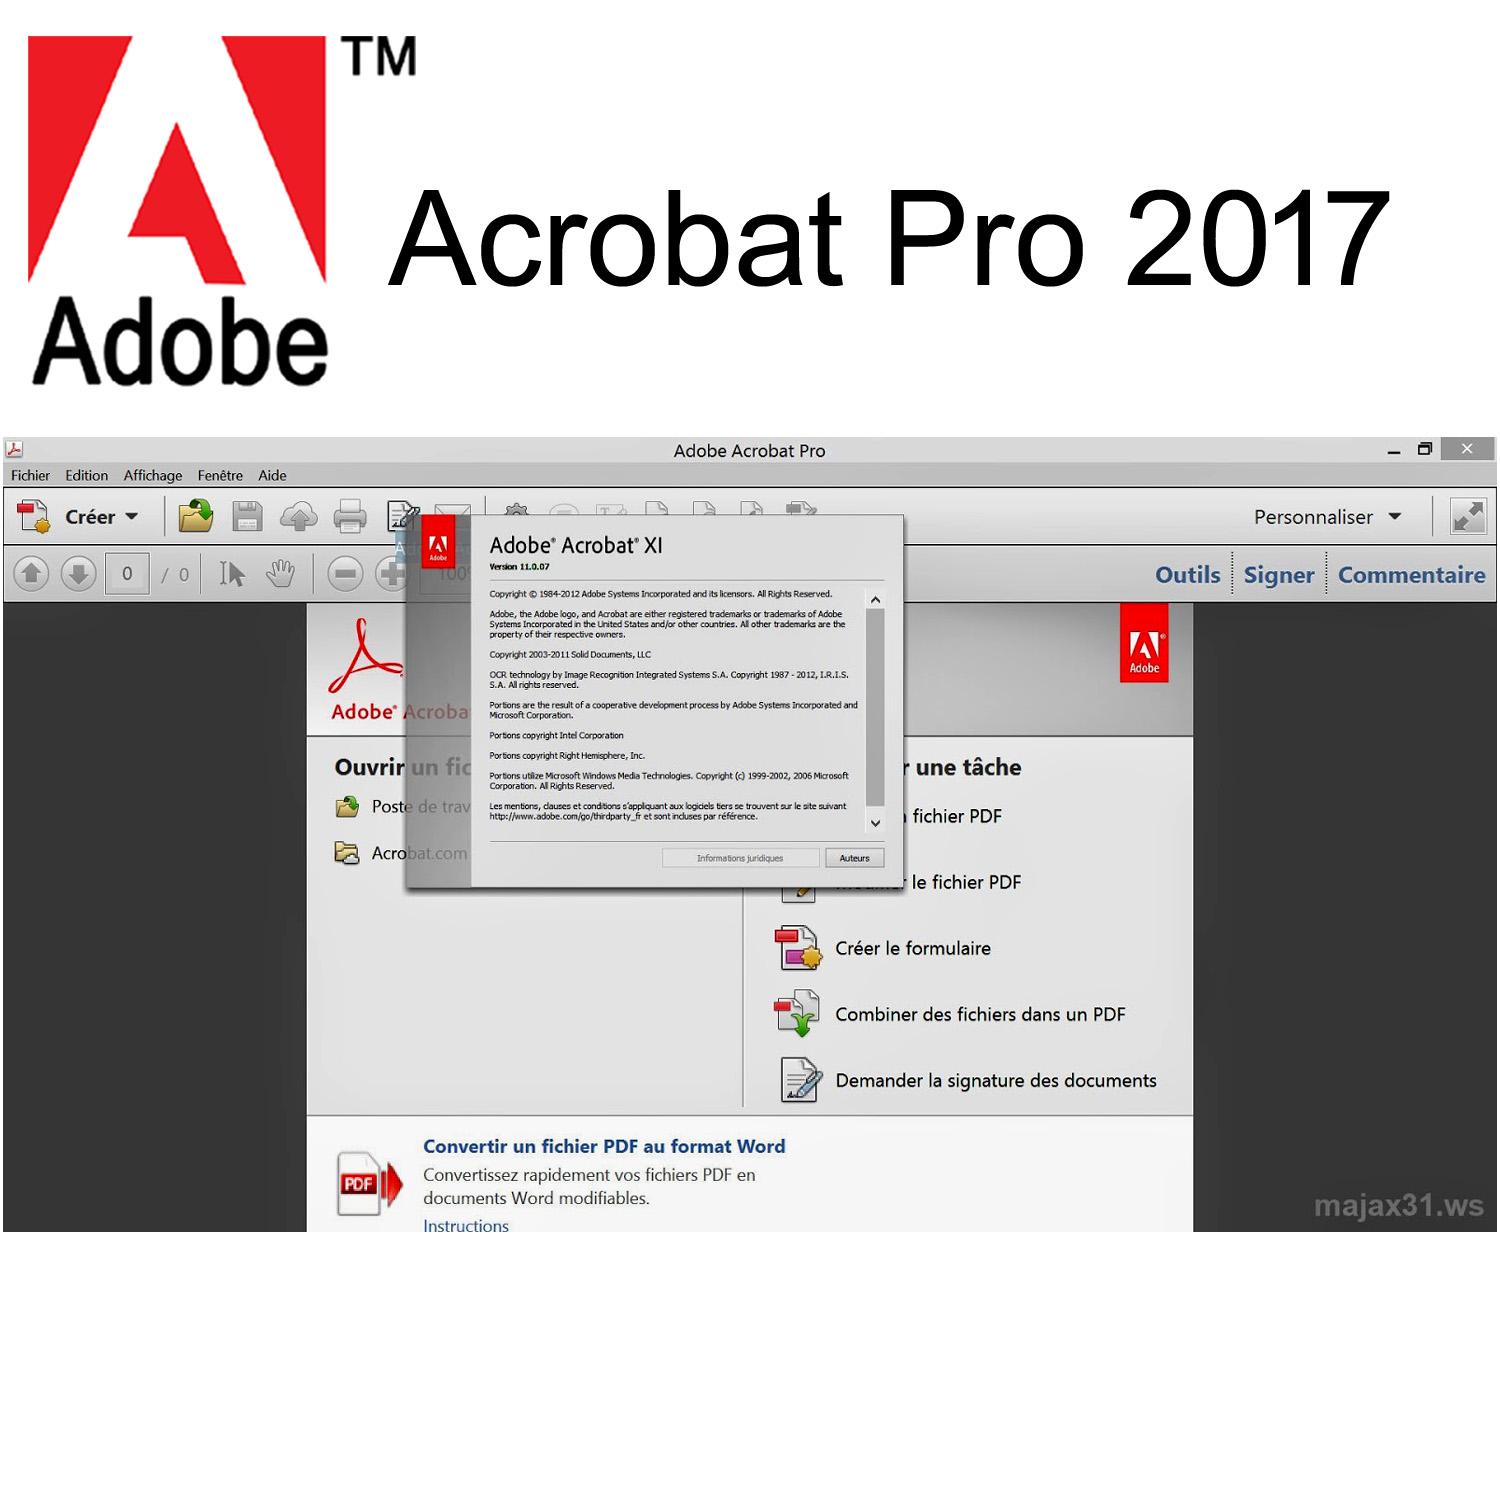 Adobe Acrobat Pro 2017 For Windows Mac Lifetime Perpetual License